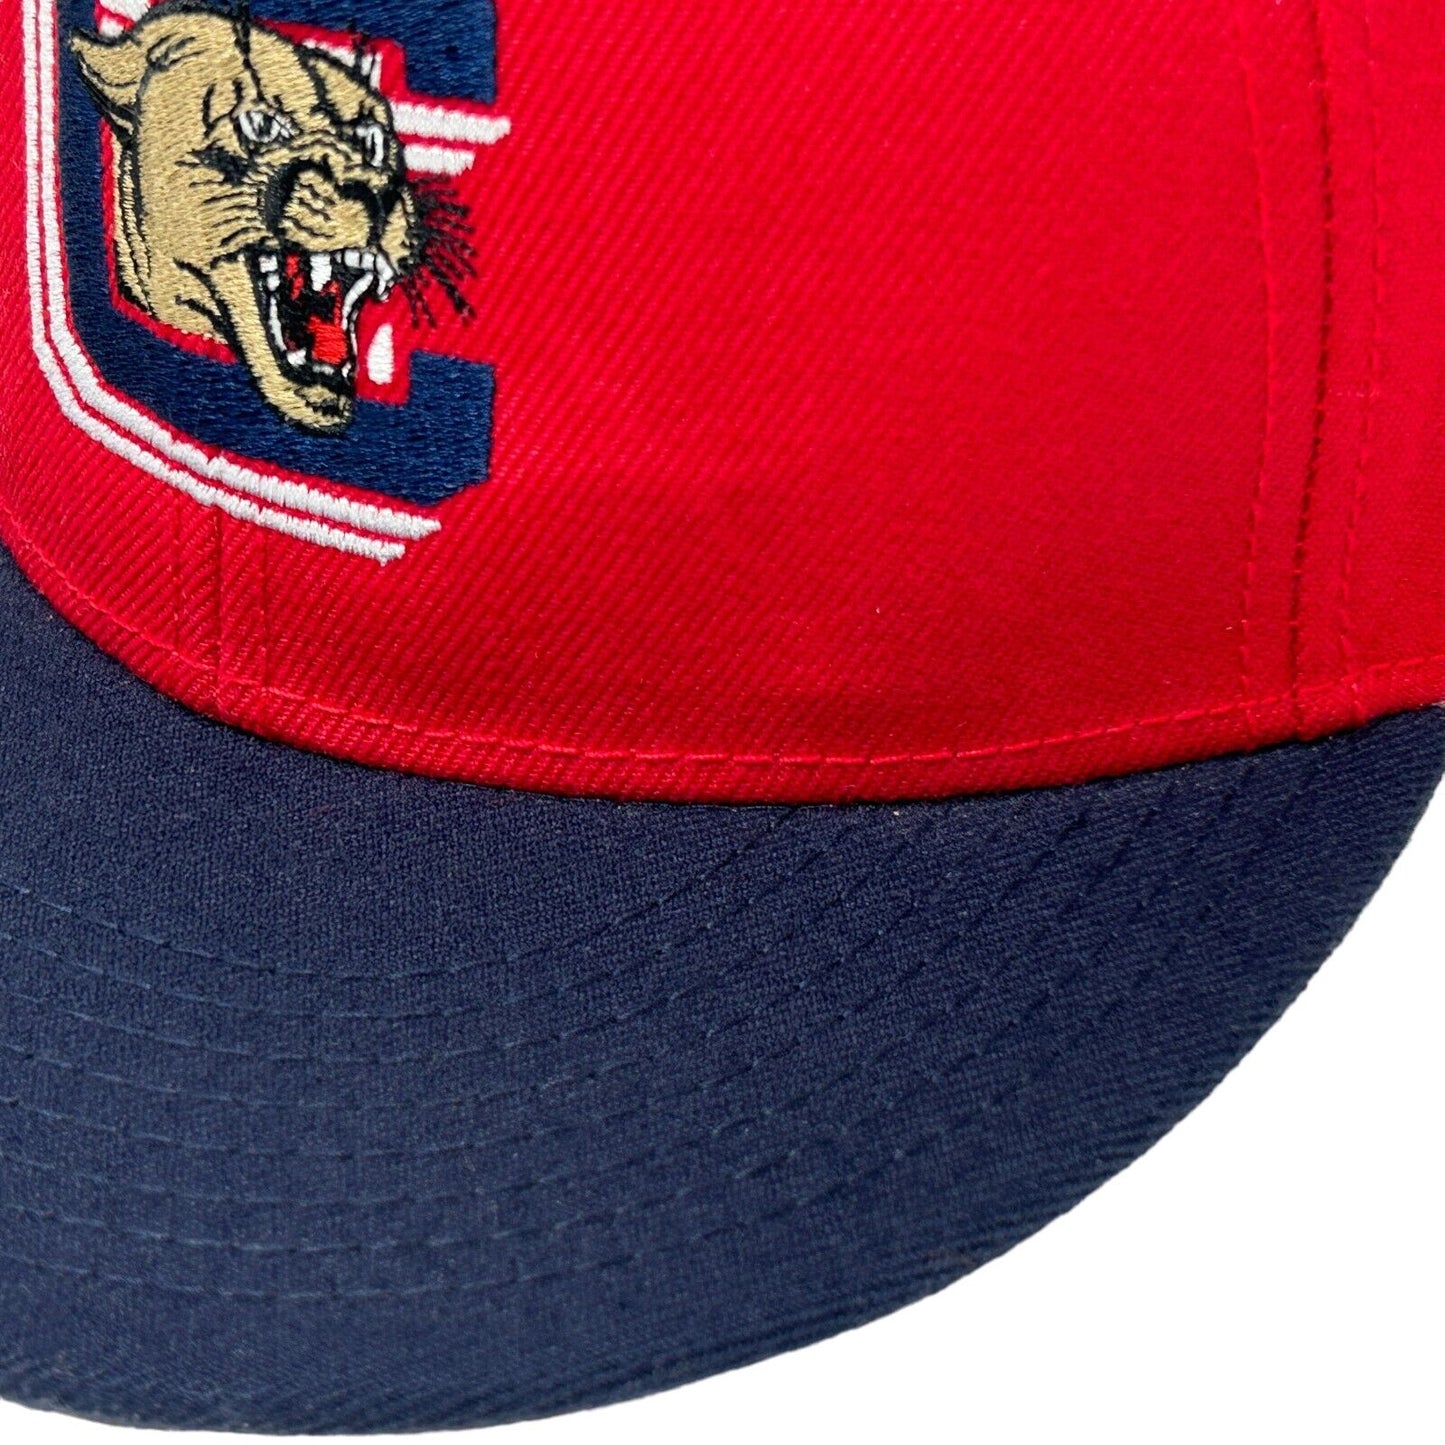 University of Houston Cougars Hat NCAA UH Wool Blend Red Snapback Baseball Cap